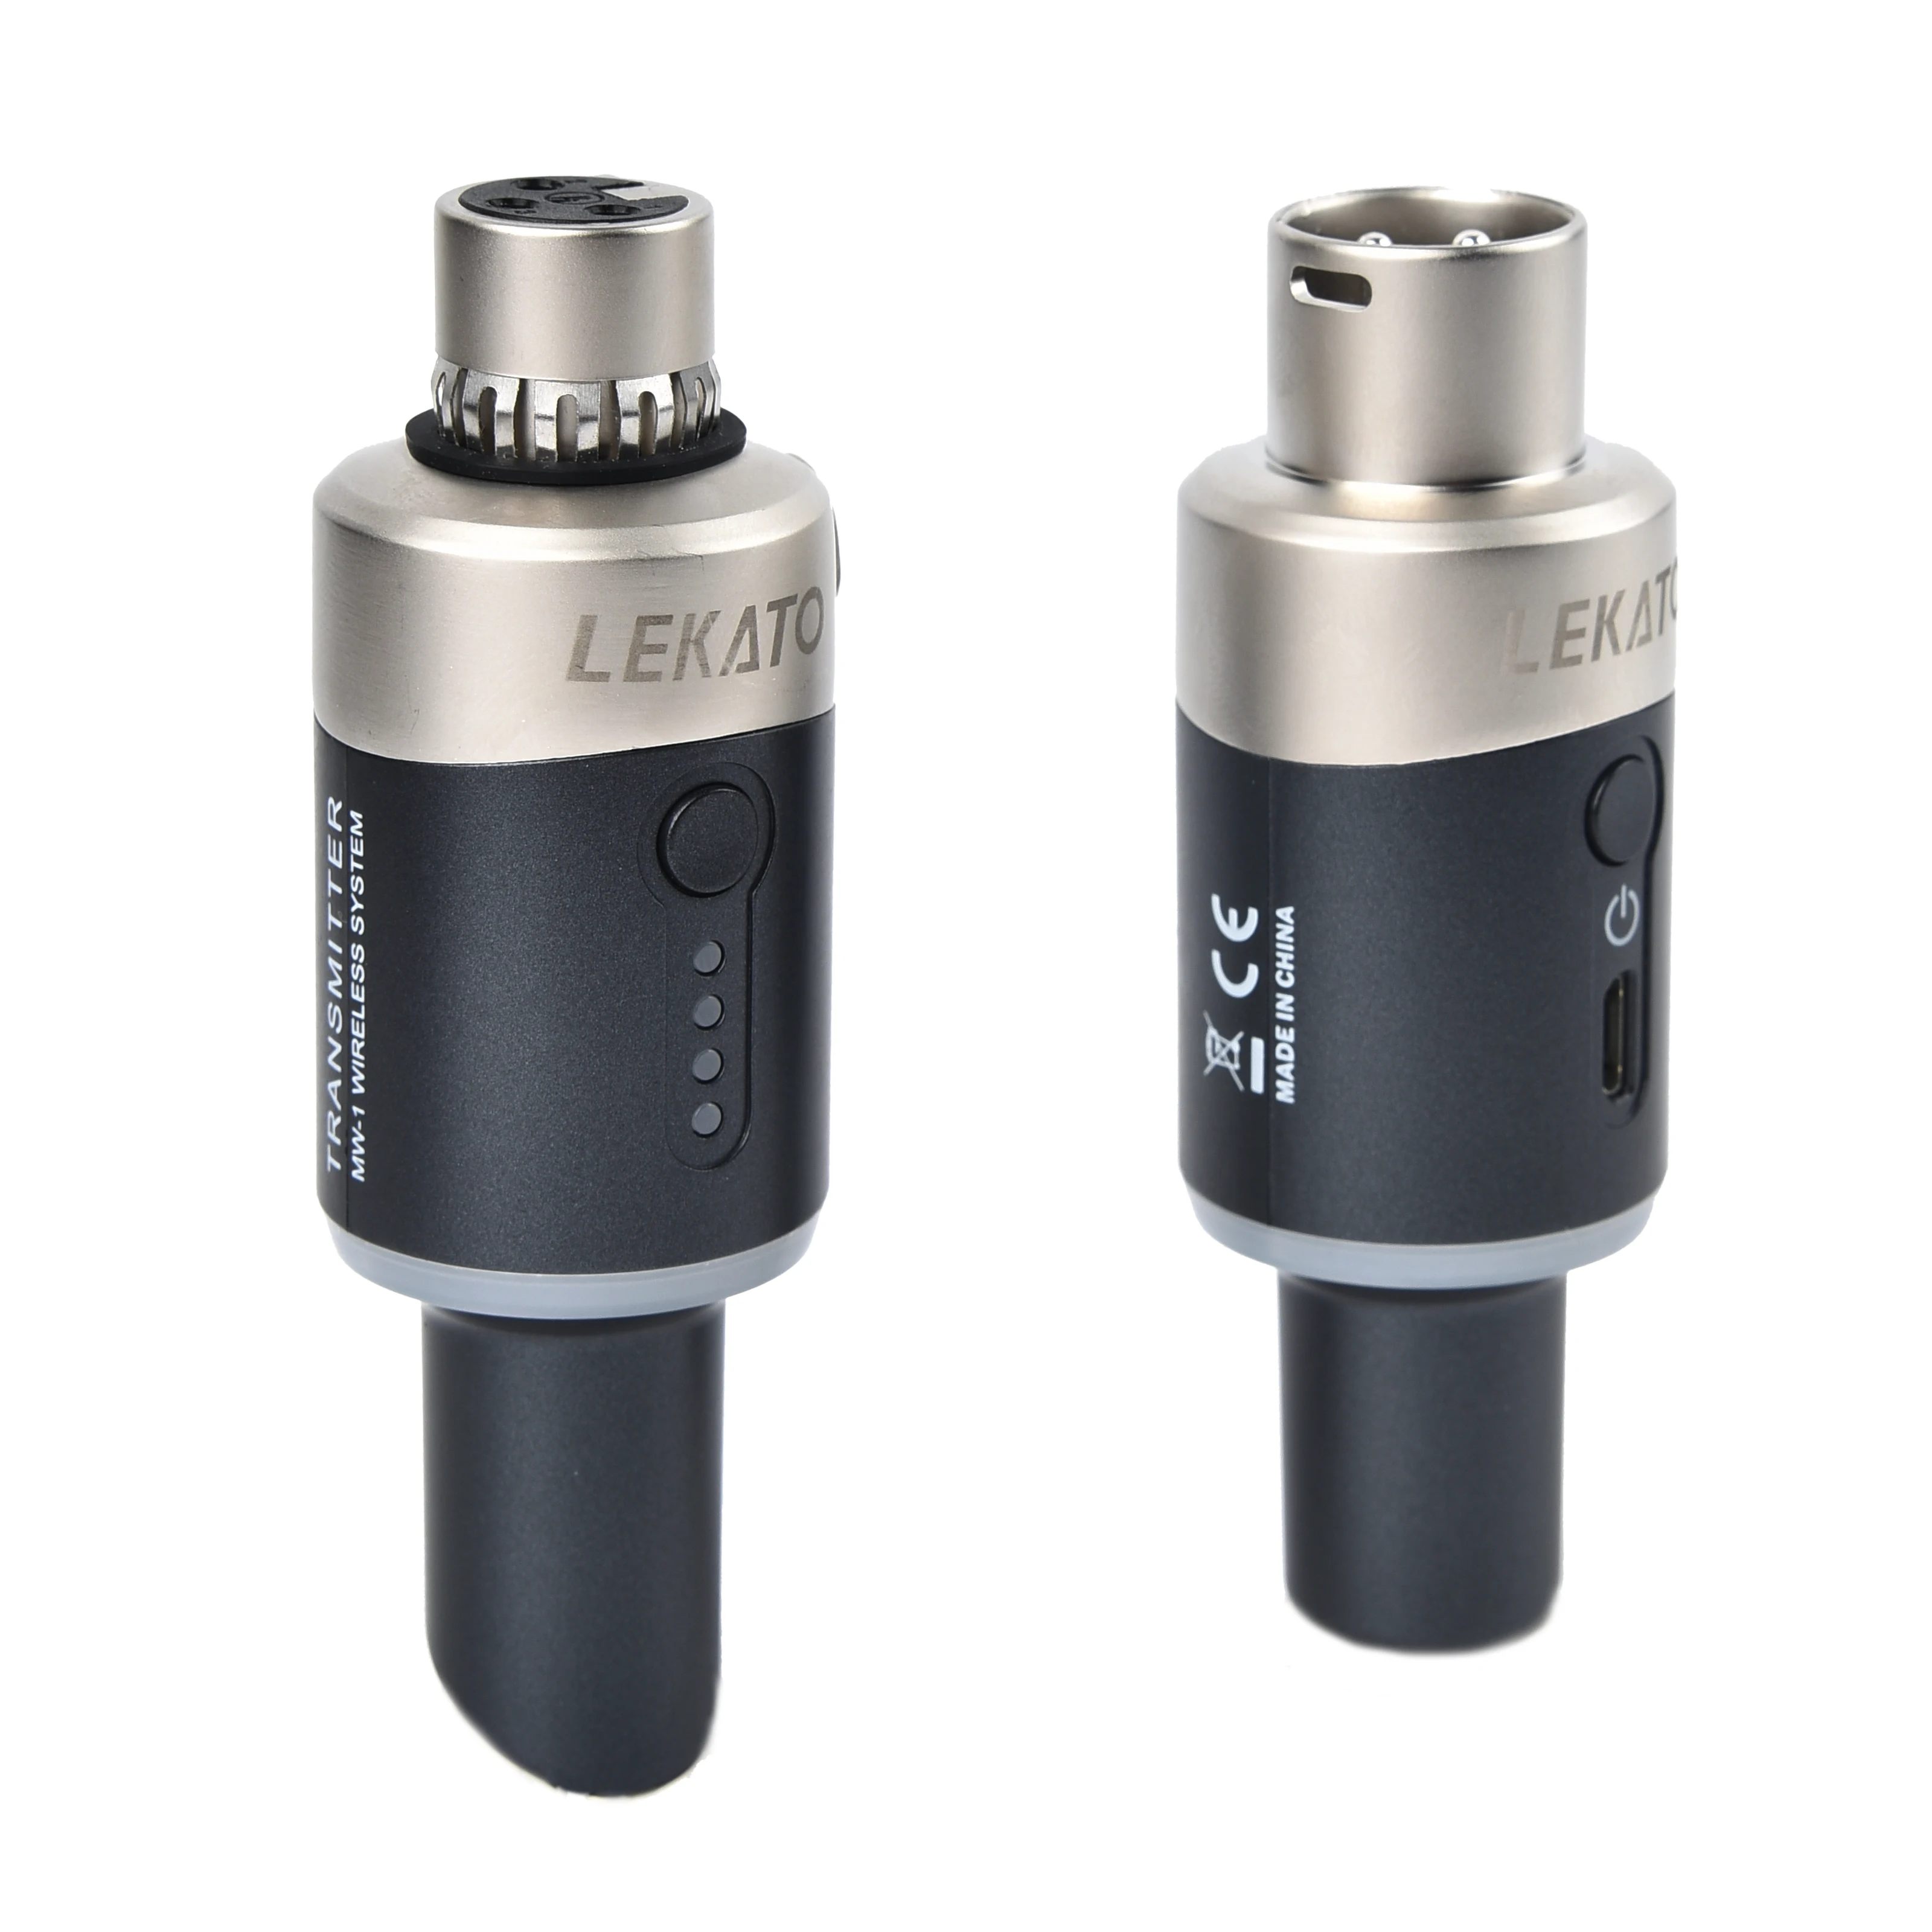 

LEKATO MW-1 5.8GHz Wireless Microphone System Plug On XLR Wireless Transmitter Receiver For Effector Dynamic Microphone